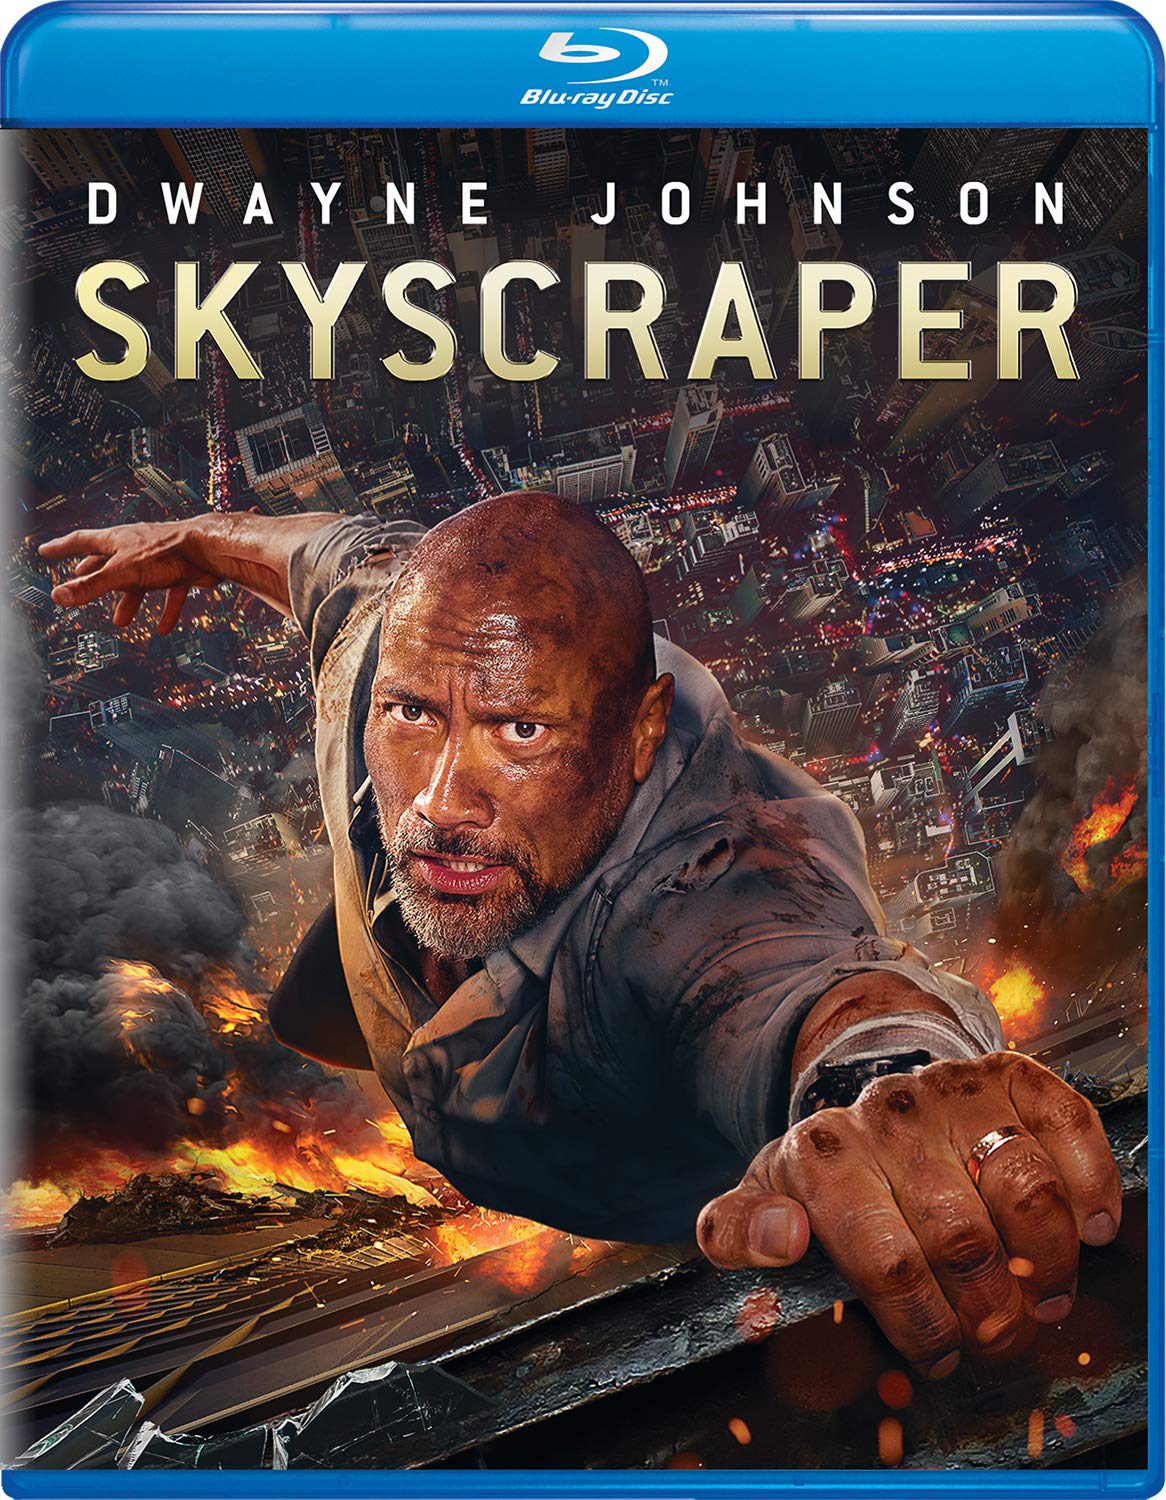 Skyscraper (Blu-ray New Box Art) - Blu-ray [ 2018 ]  - Action Movies On Blu-ray - Movies On GRUV